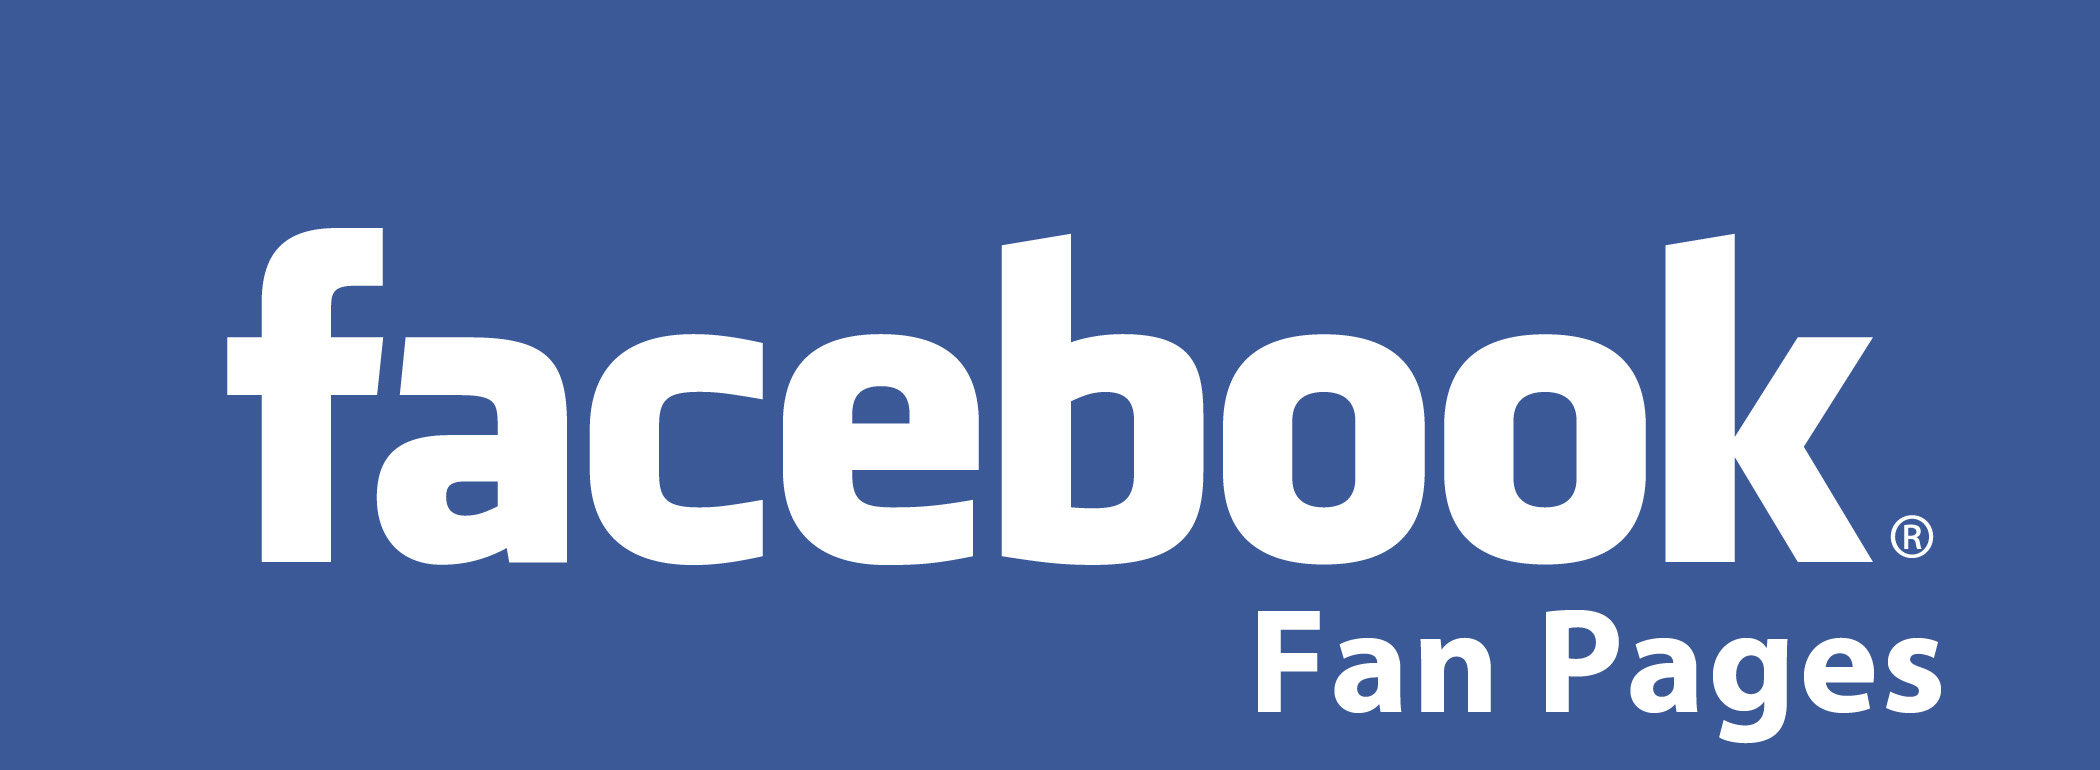 facebook logo fan pages large 12